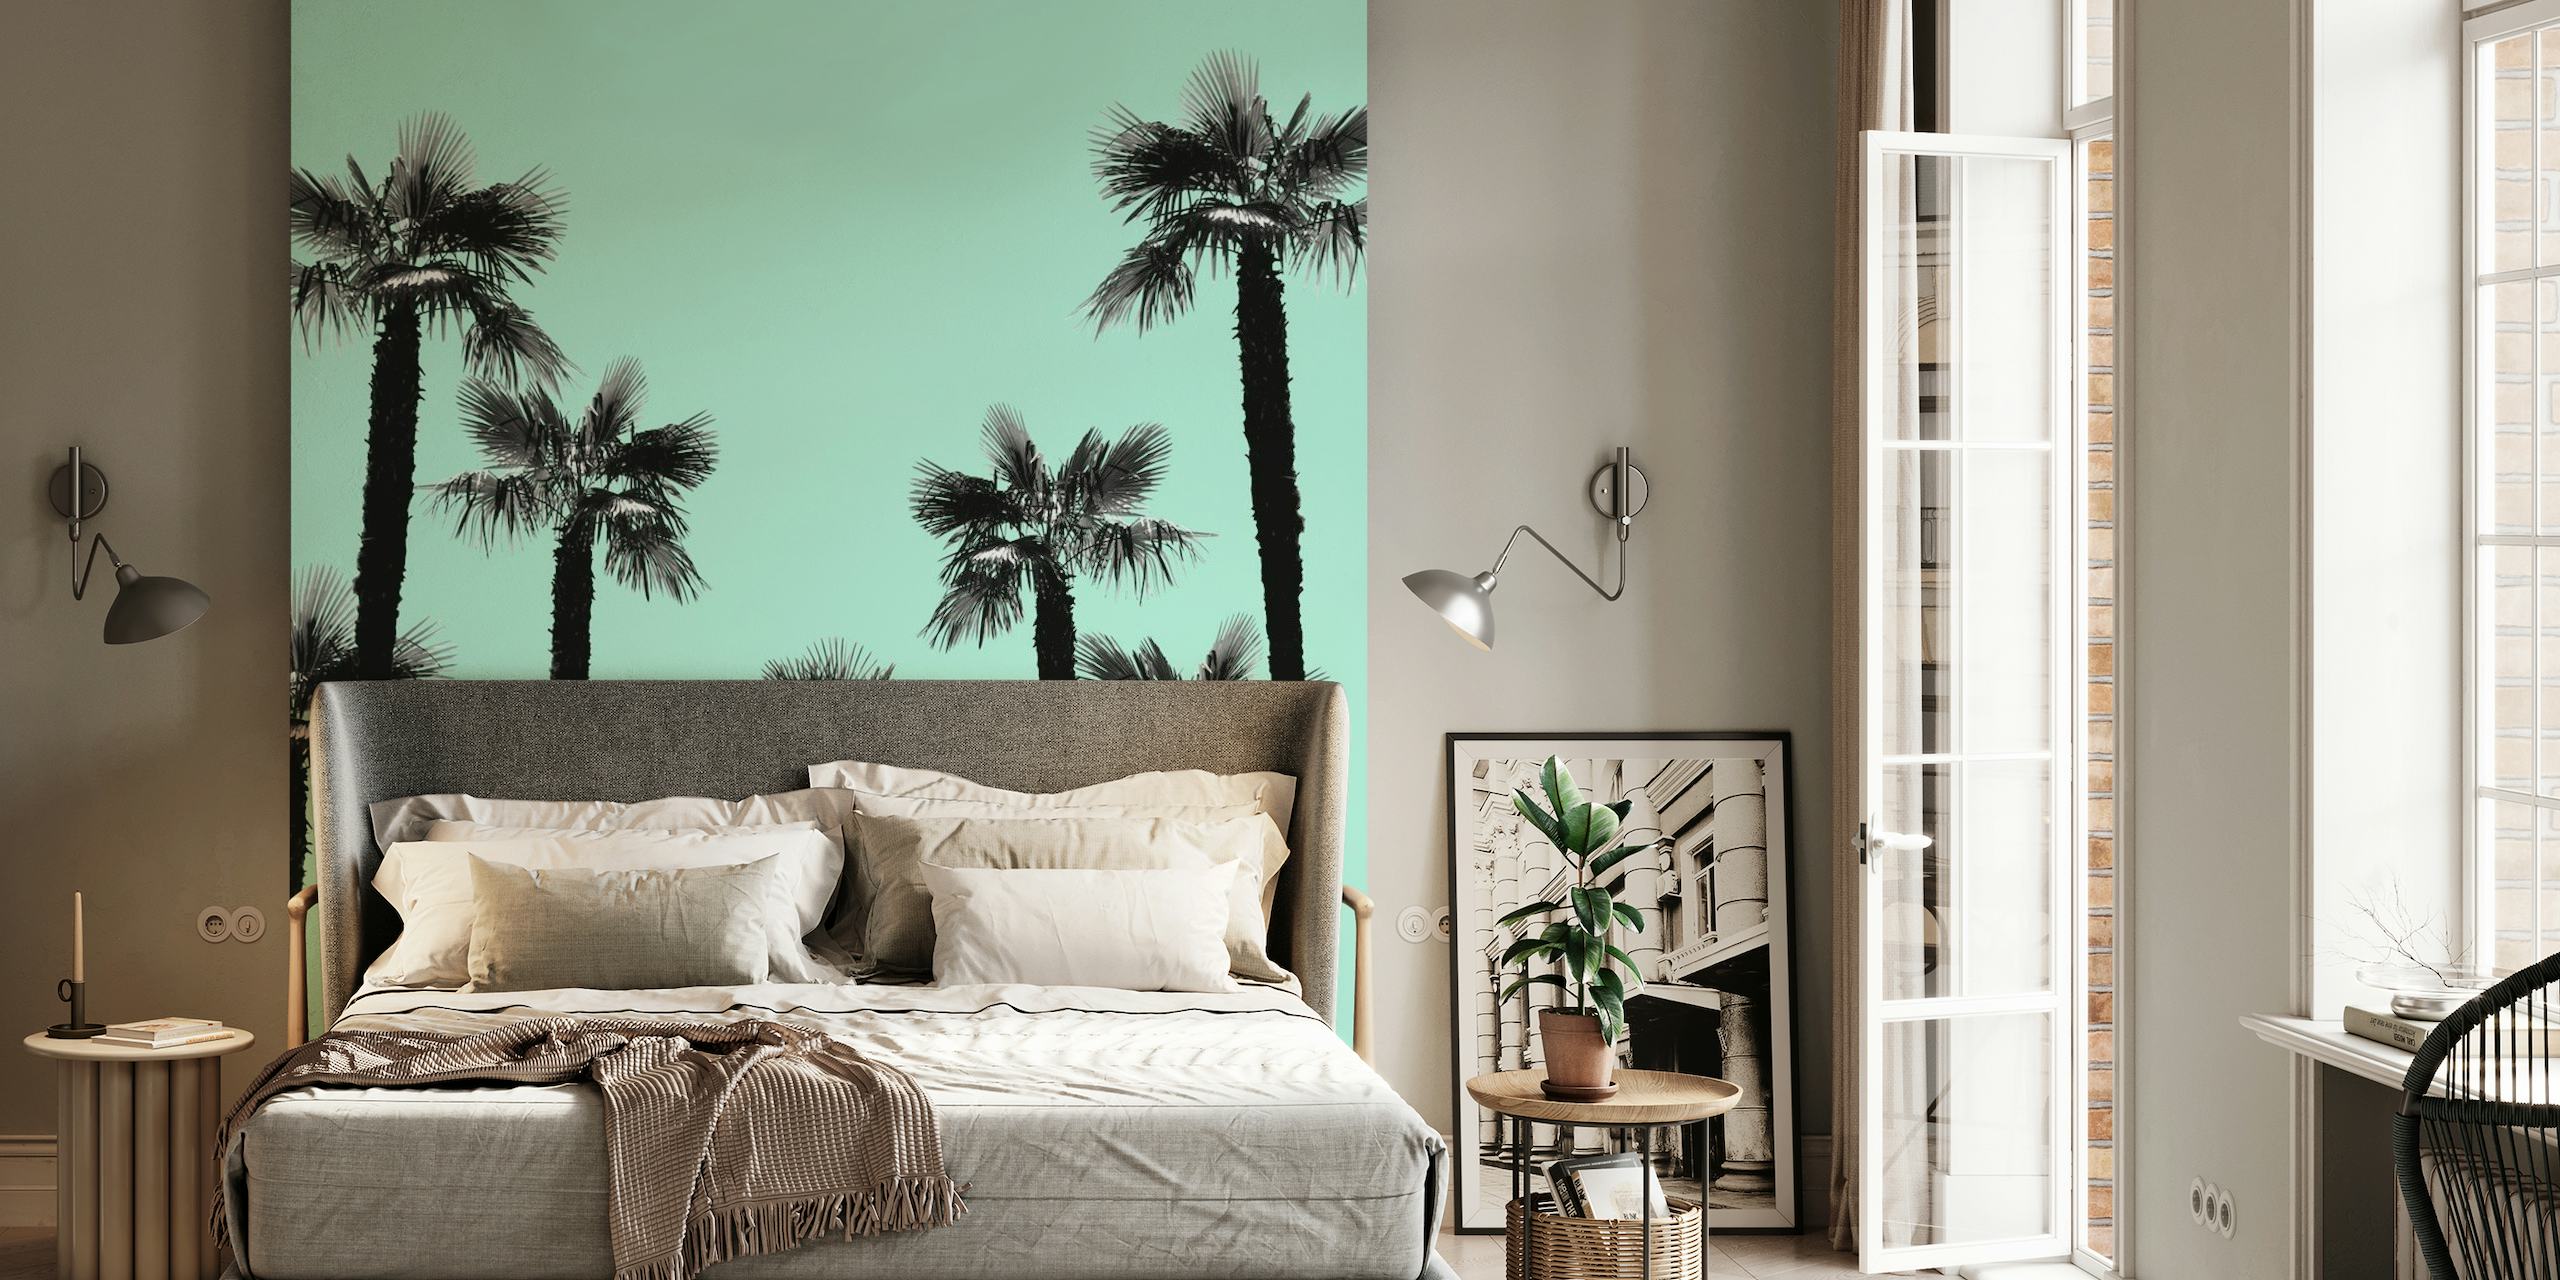 Tropical Palm Trees Dream 5 wallpaper